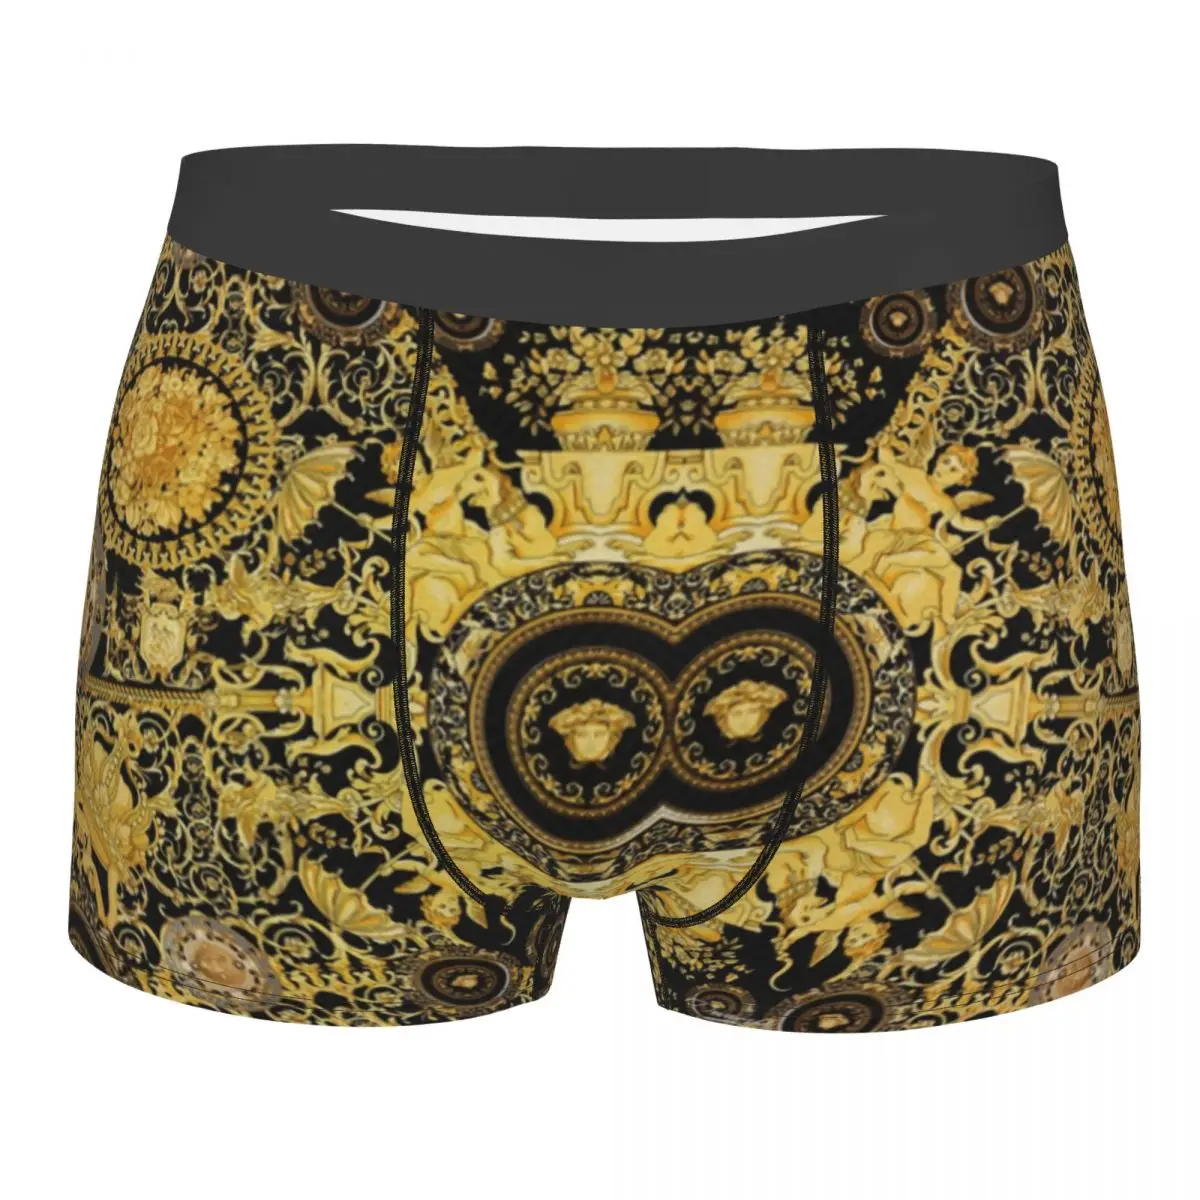 Male Sexy Decorative Design, Baroque, Gold, Luxurious, European Underwear Boxer Briefs Men Soft Shorts Underpants